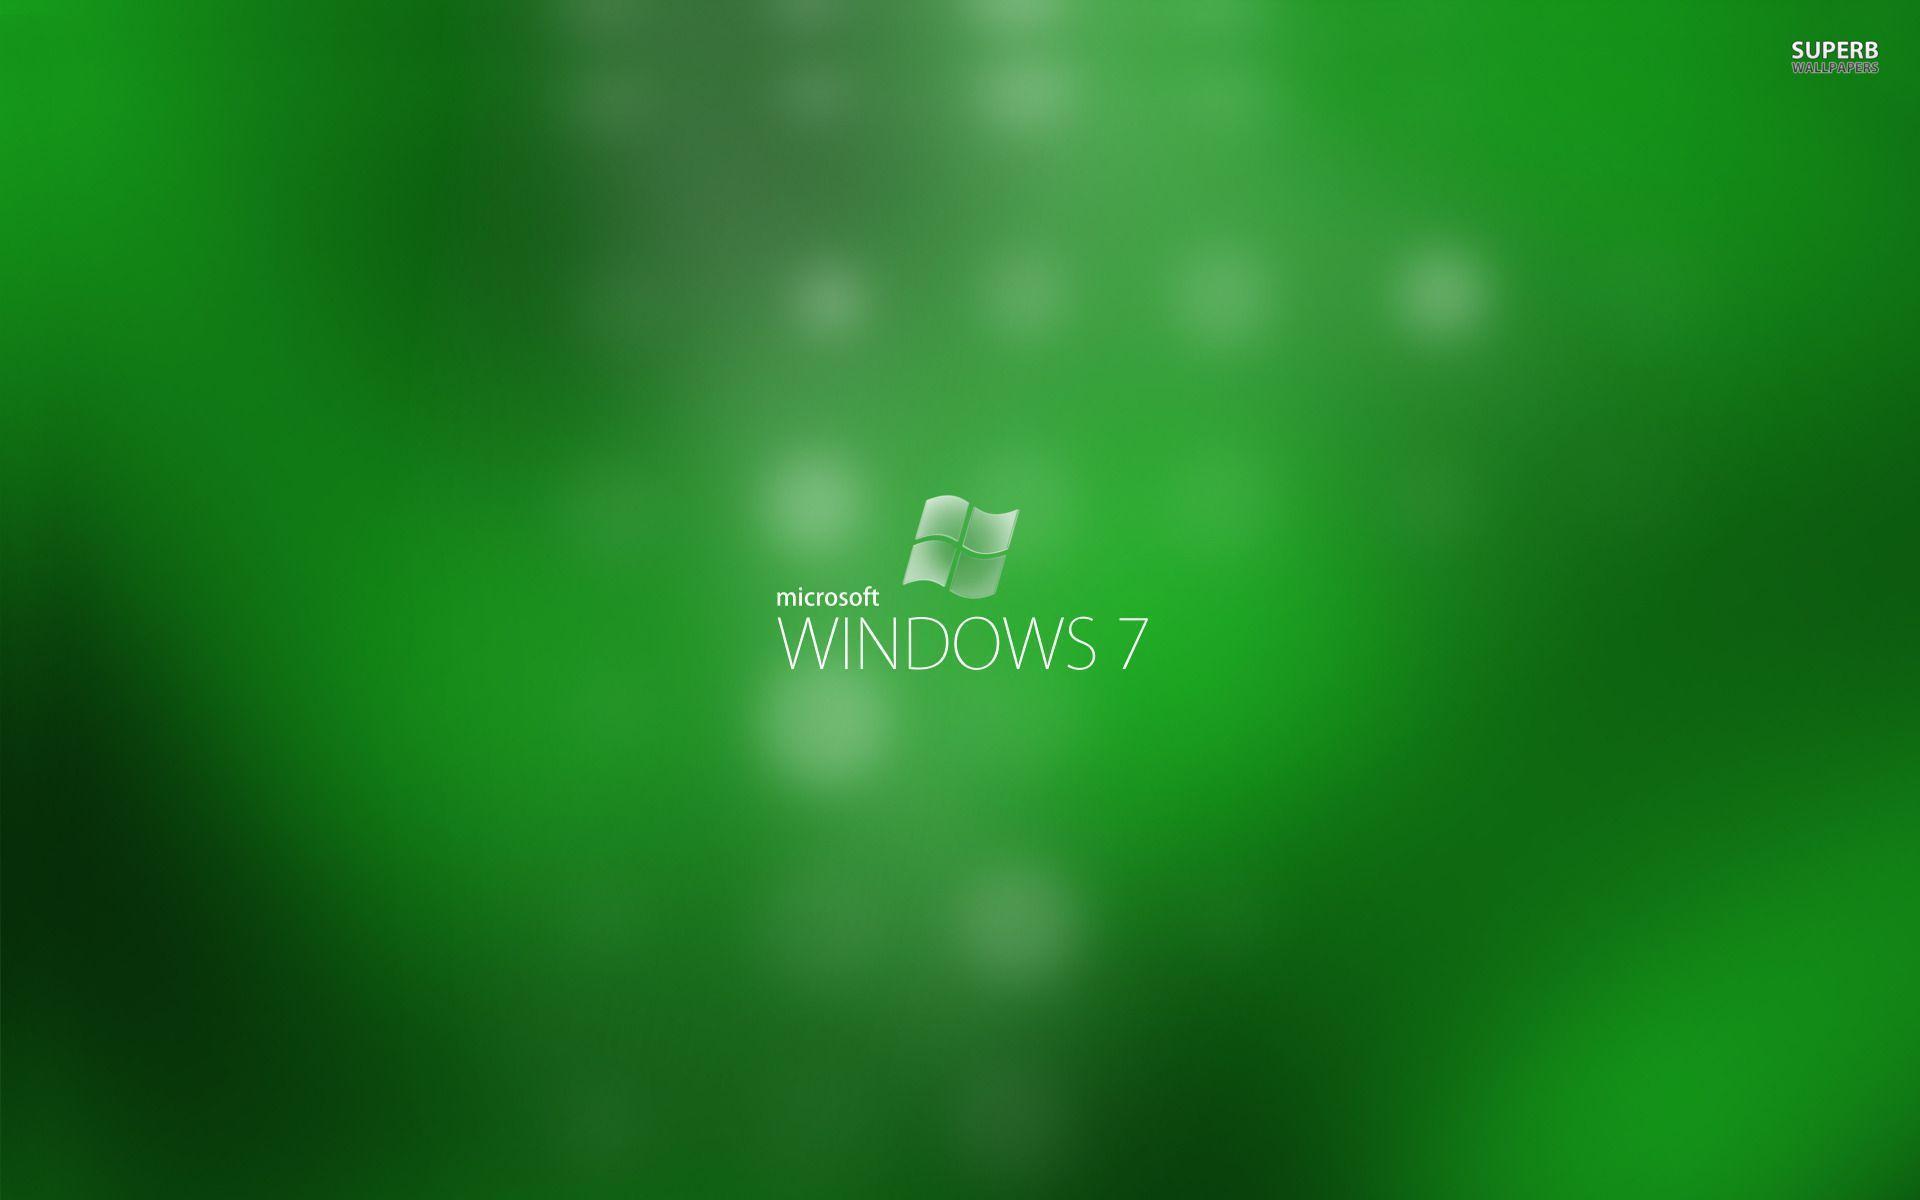 windows 7 ultimate green wallpaper